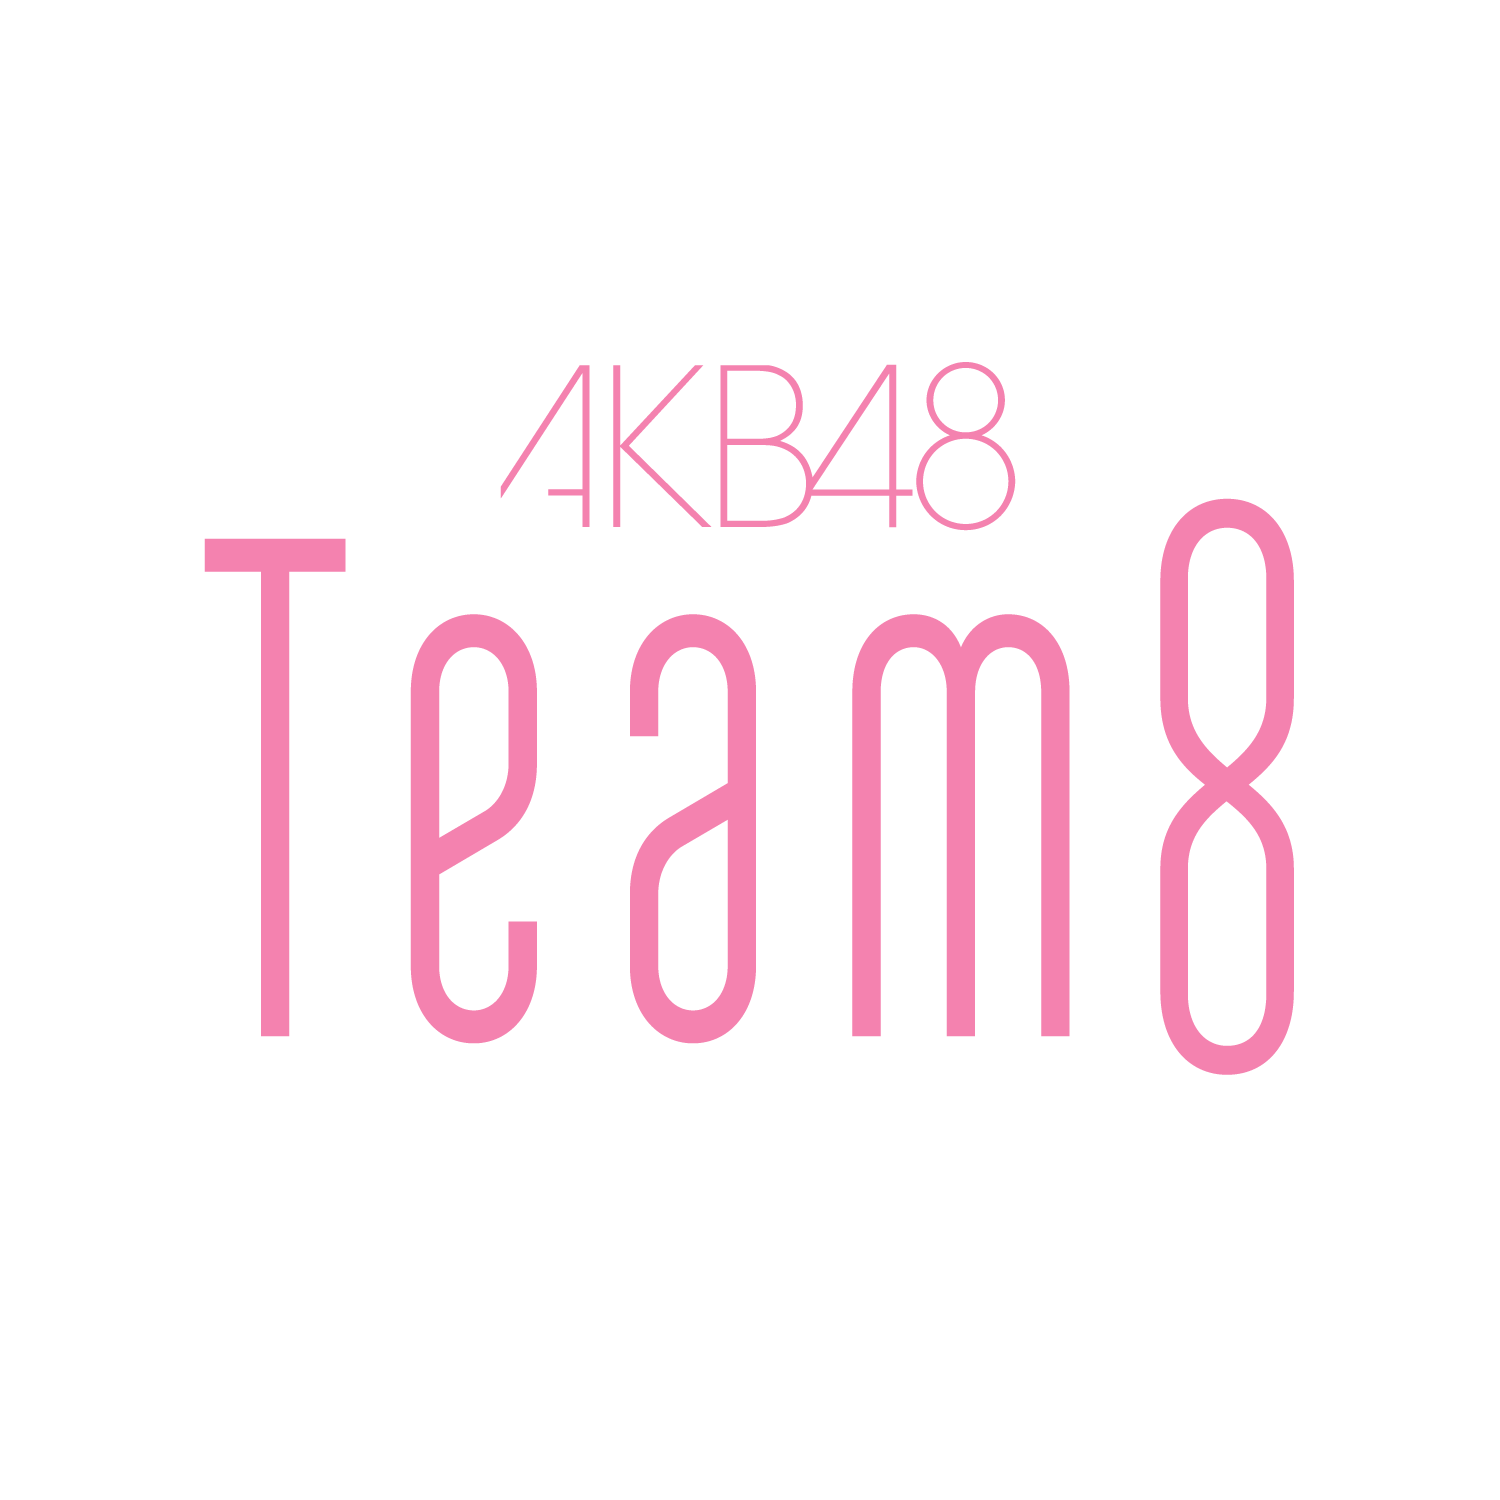 www.akb48team8.jp